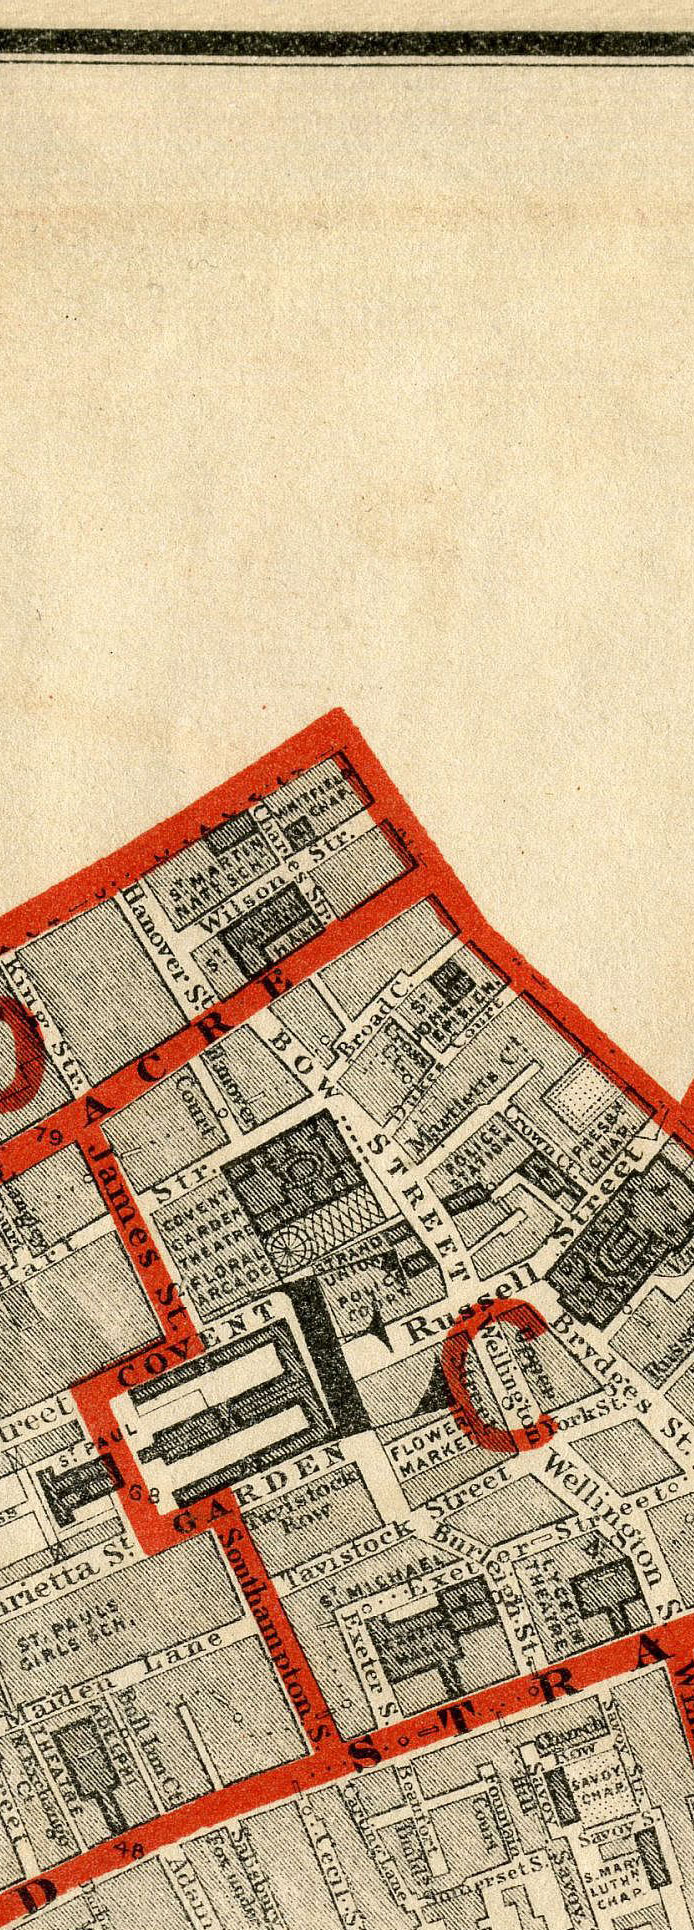 Stanford's School Board Map - Westminster 1877